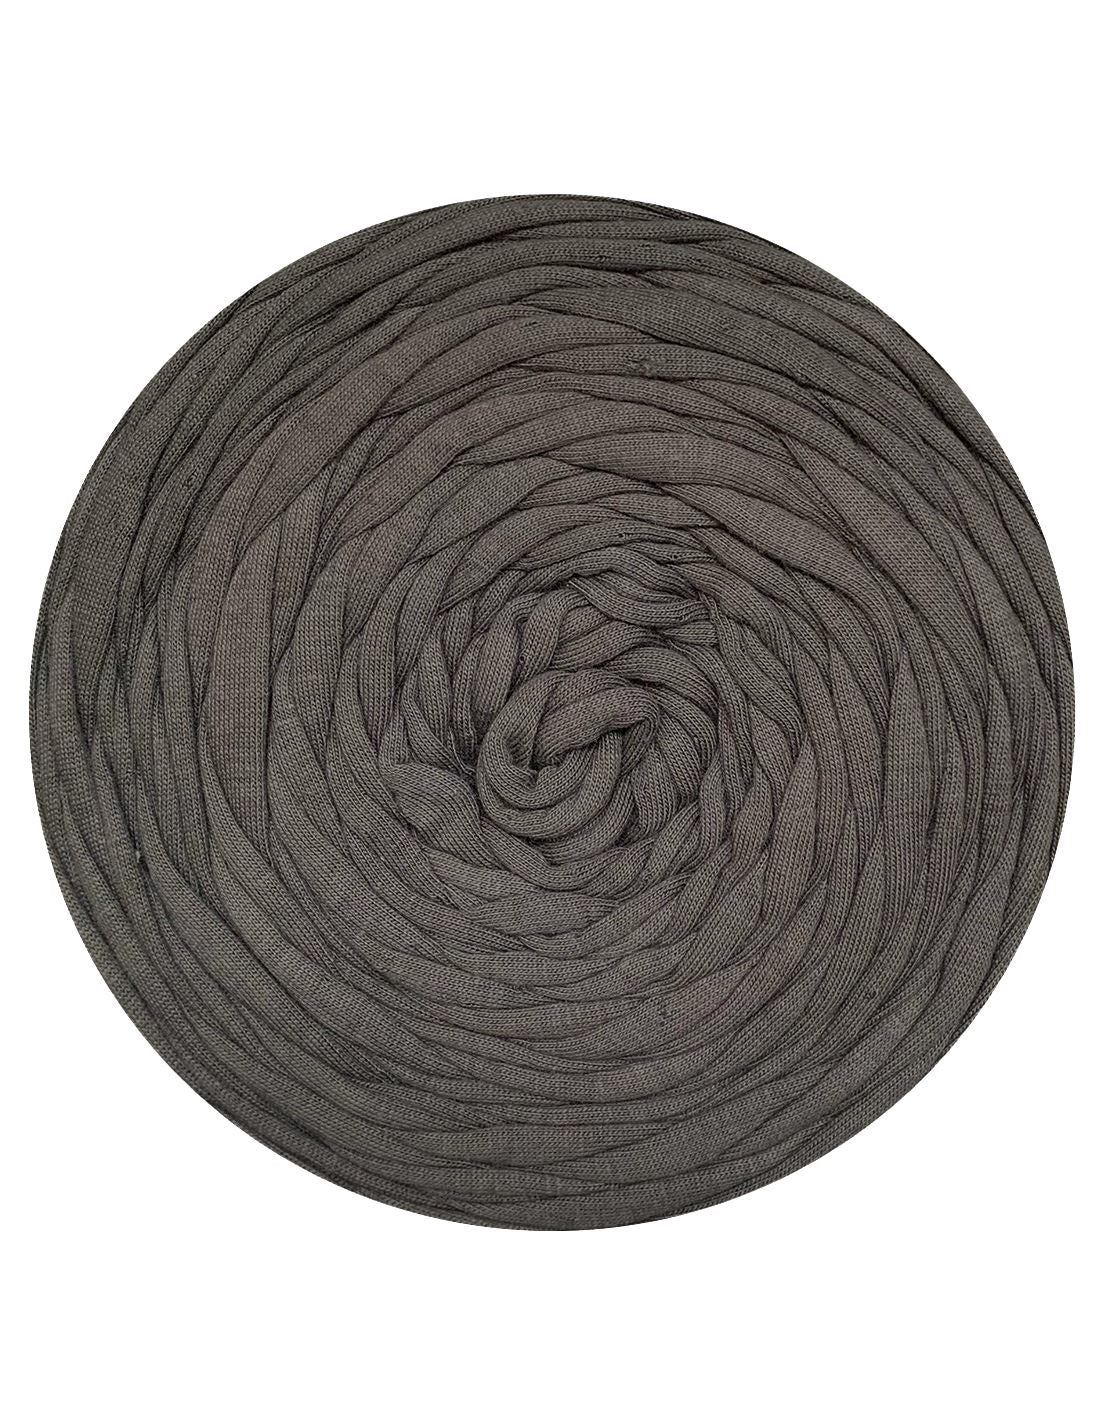 Pale slate grey t-shirt yarn (100-120m)